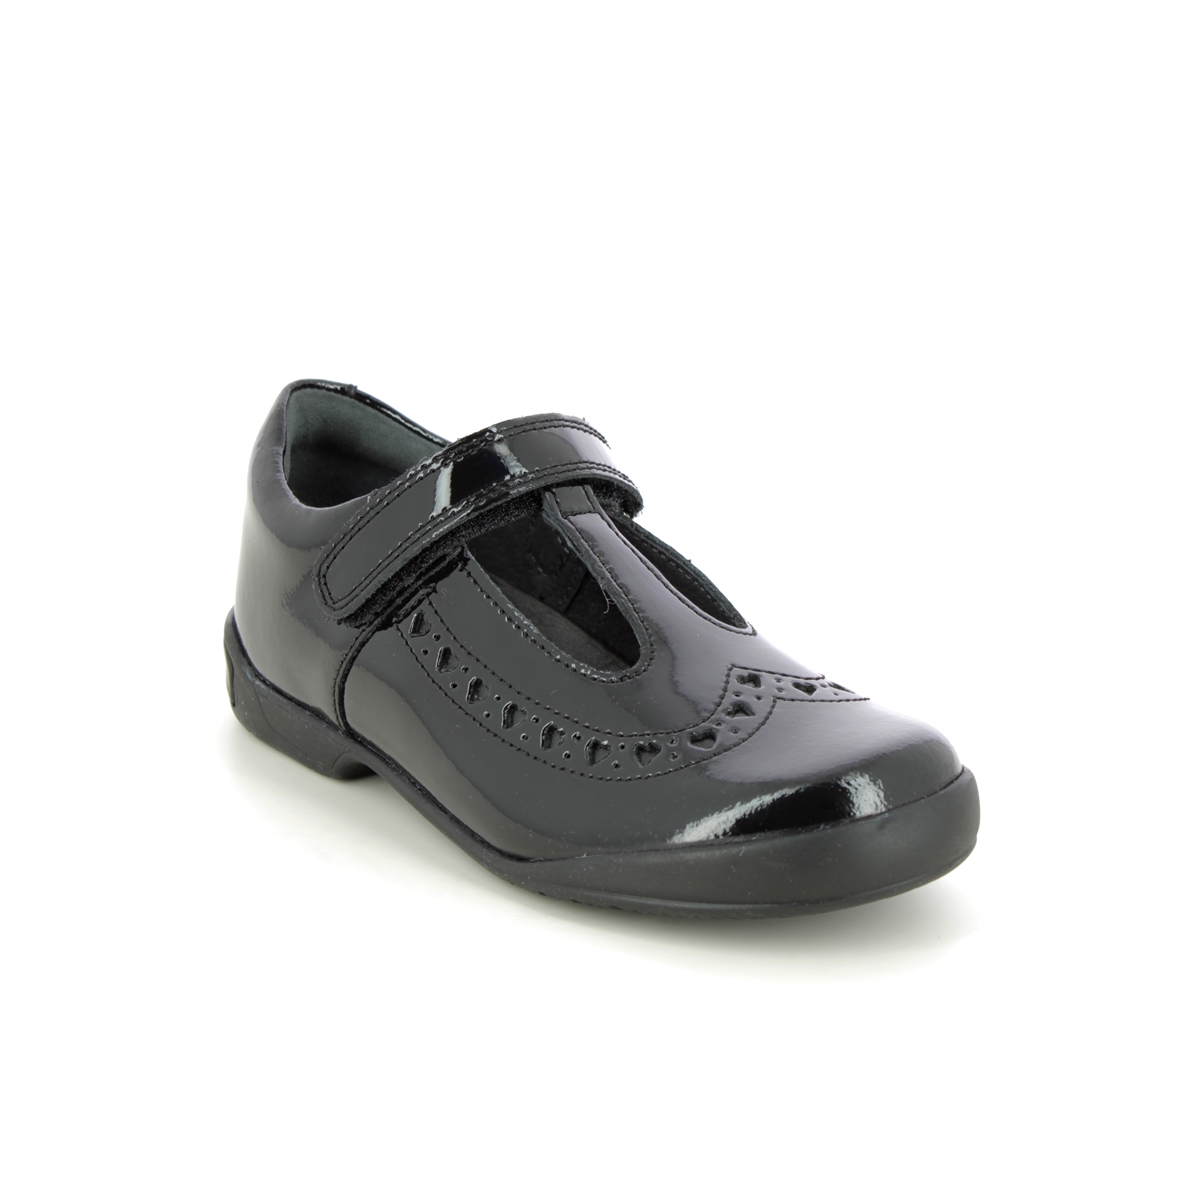 Start Rite - Leapfrog In Black Patent 2789-36F In Size 10 In Plain Black Patent For School Girls Shoes  In Black Patent For kids